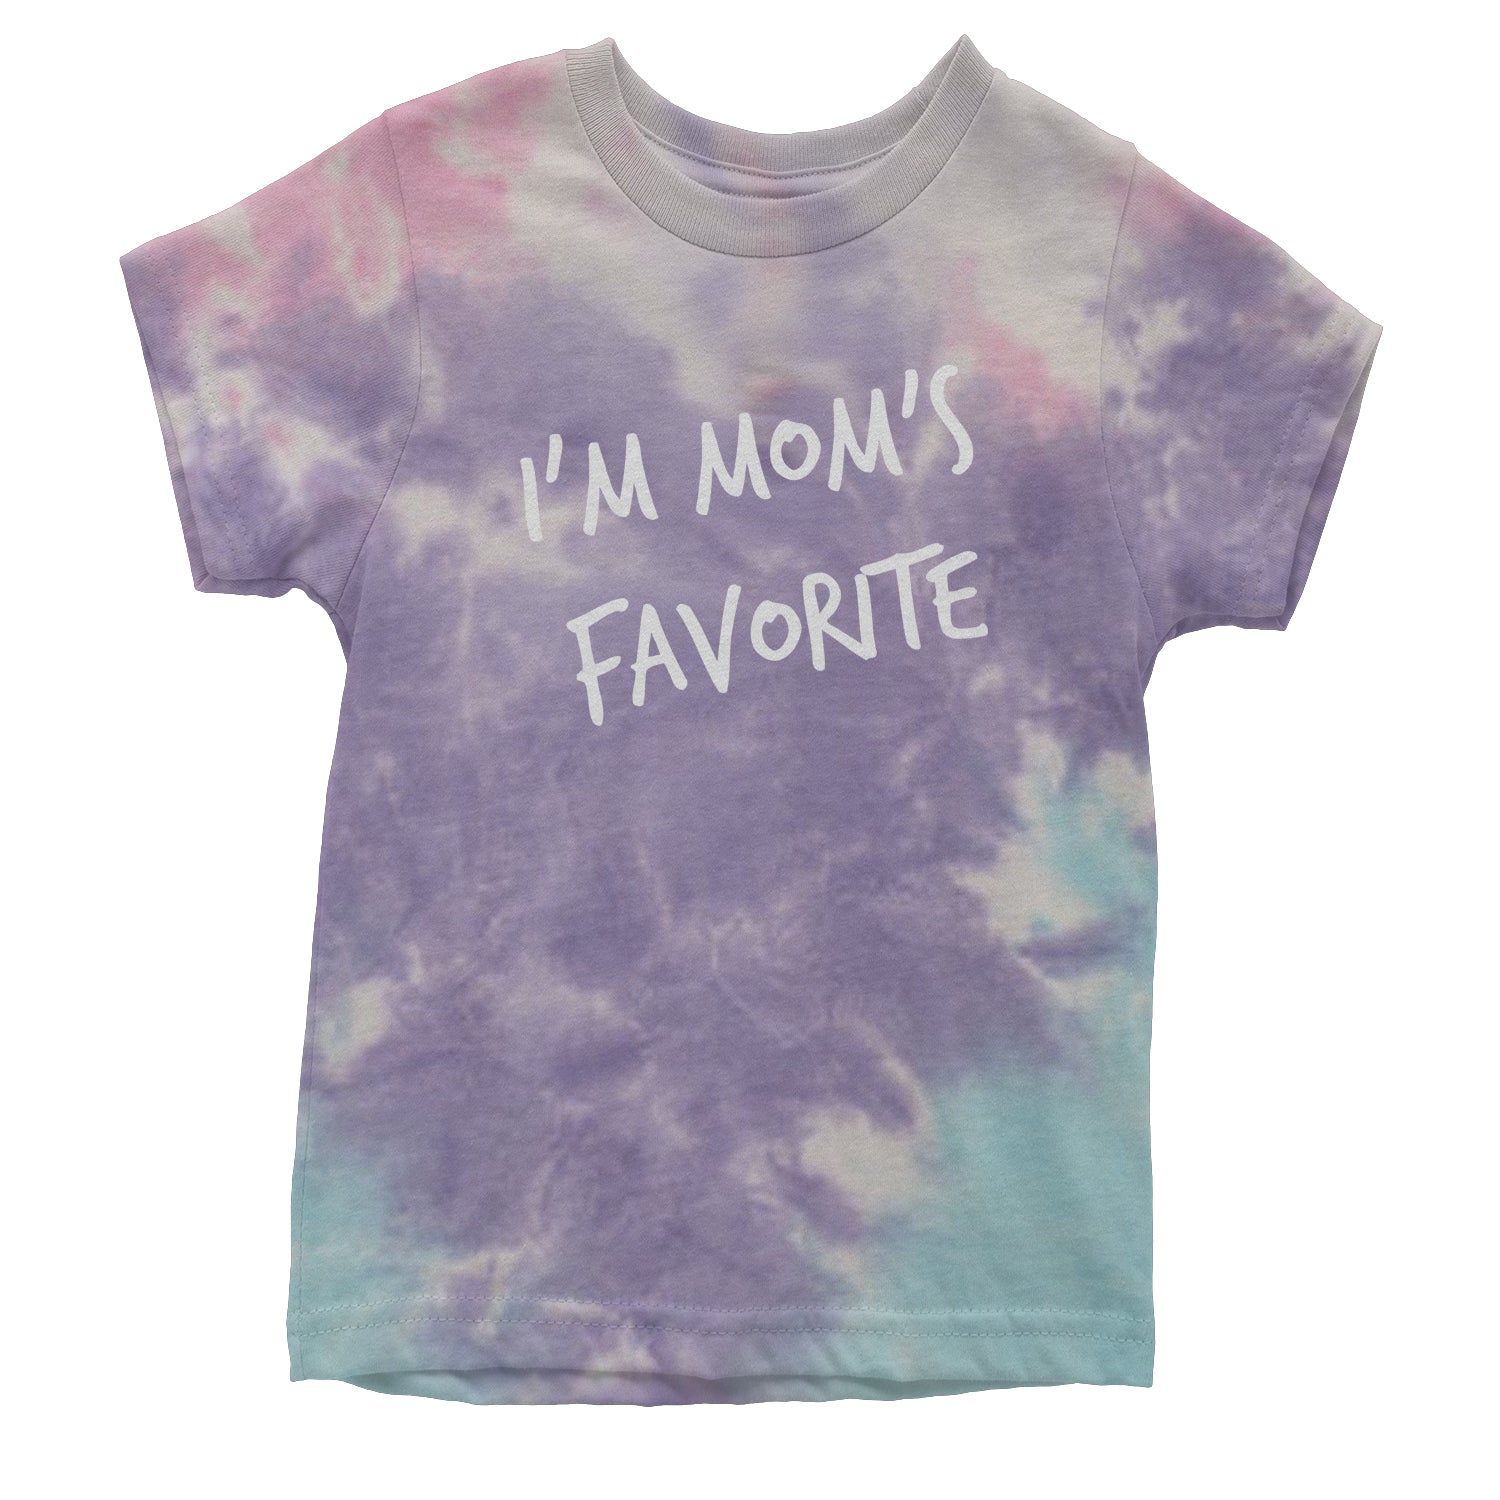 I'm Mom's Favorite Youth T-shirt bear, buck, mama, papa by Expression Tees